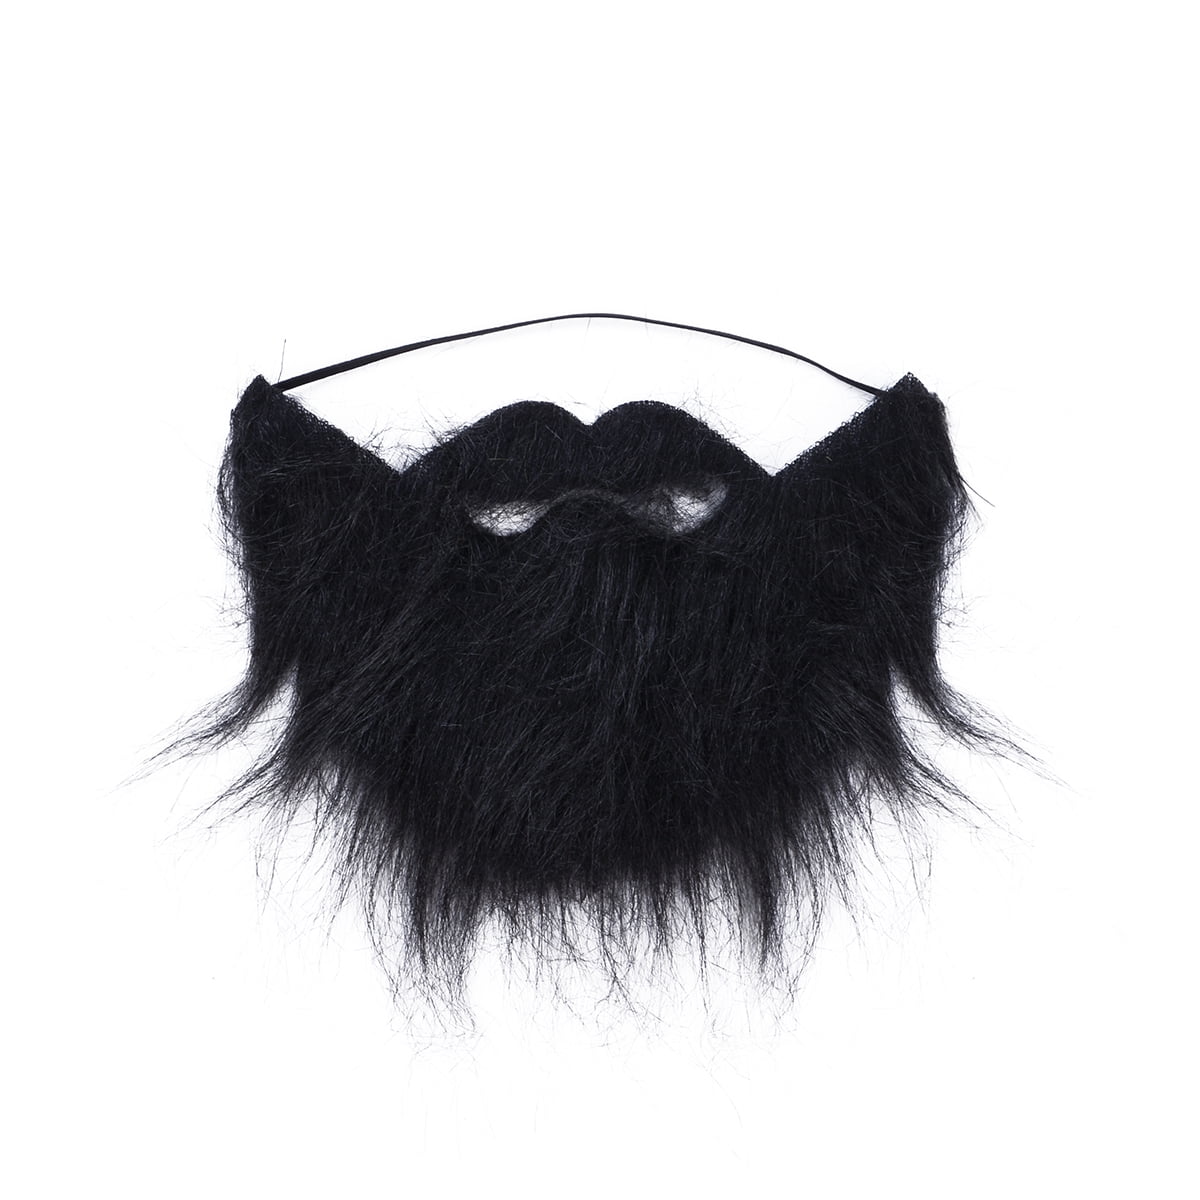 White Black False Beards Mustach Fancy Dress For Halloween Facial Hair Costume 